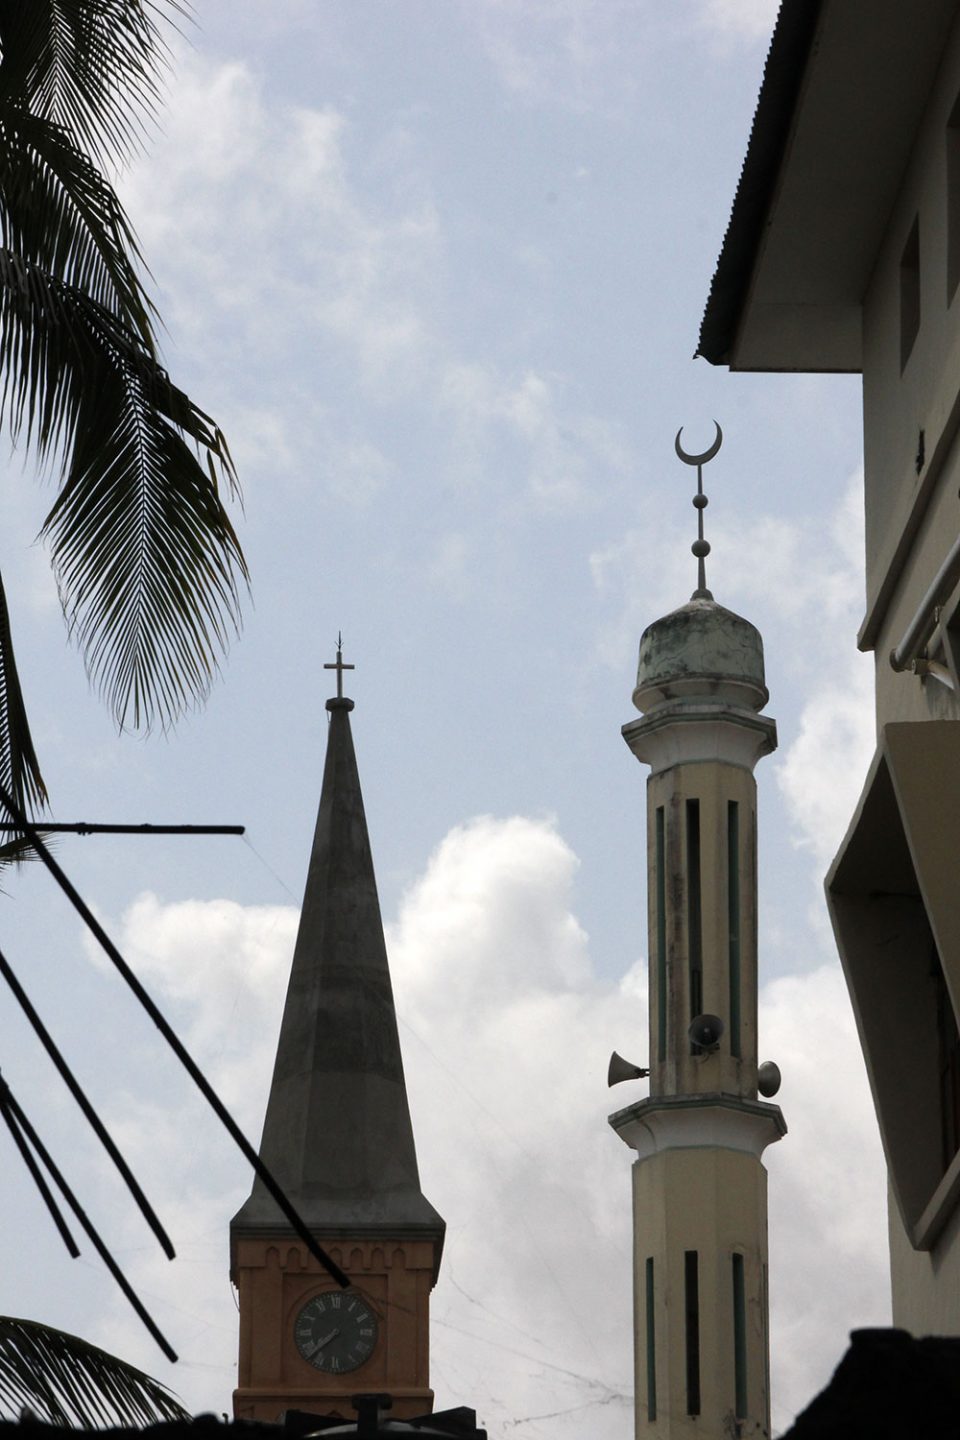 A church's tower next to a mosque's minarett